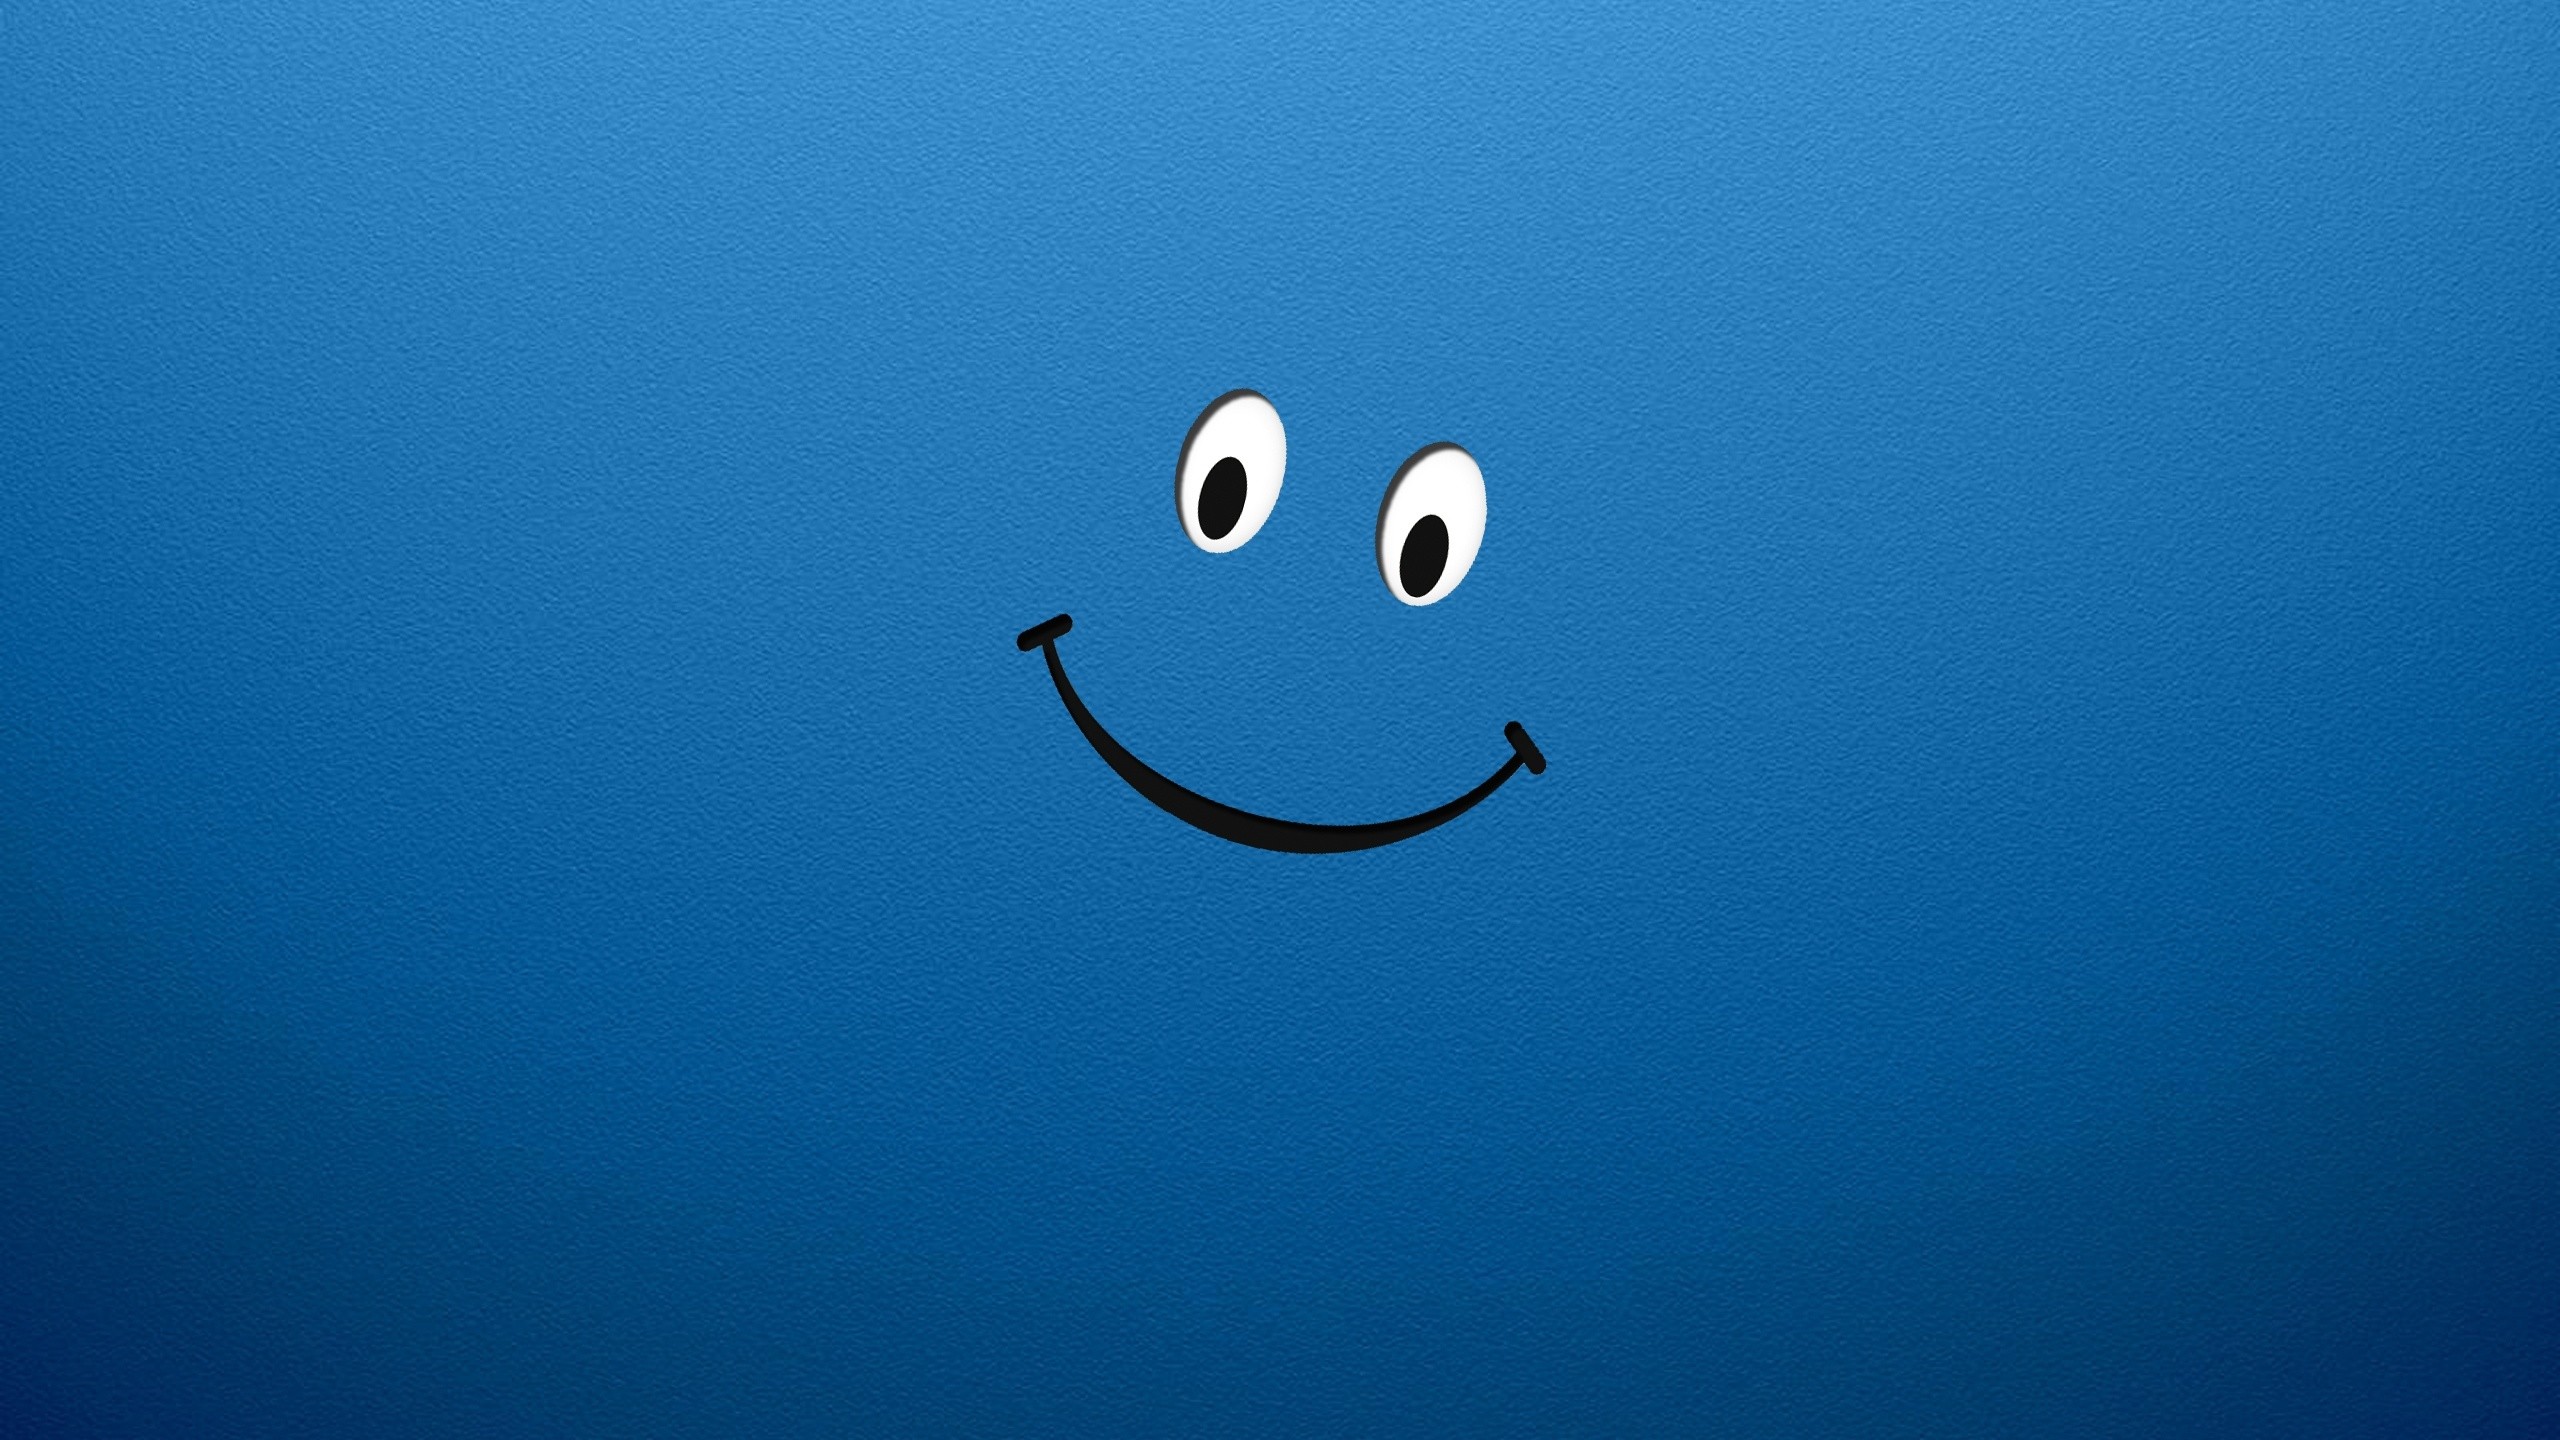 Smiley Face Wallpaper Smiling Blue Smile